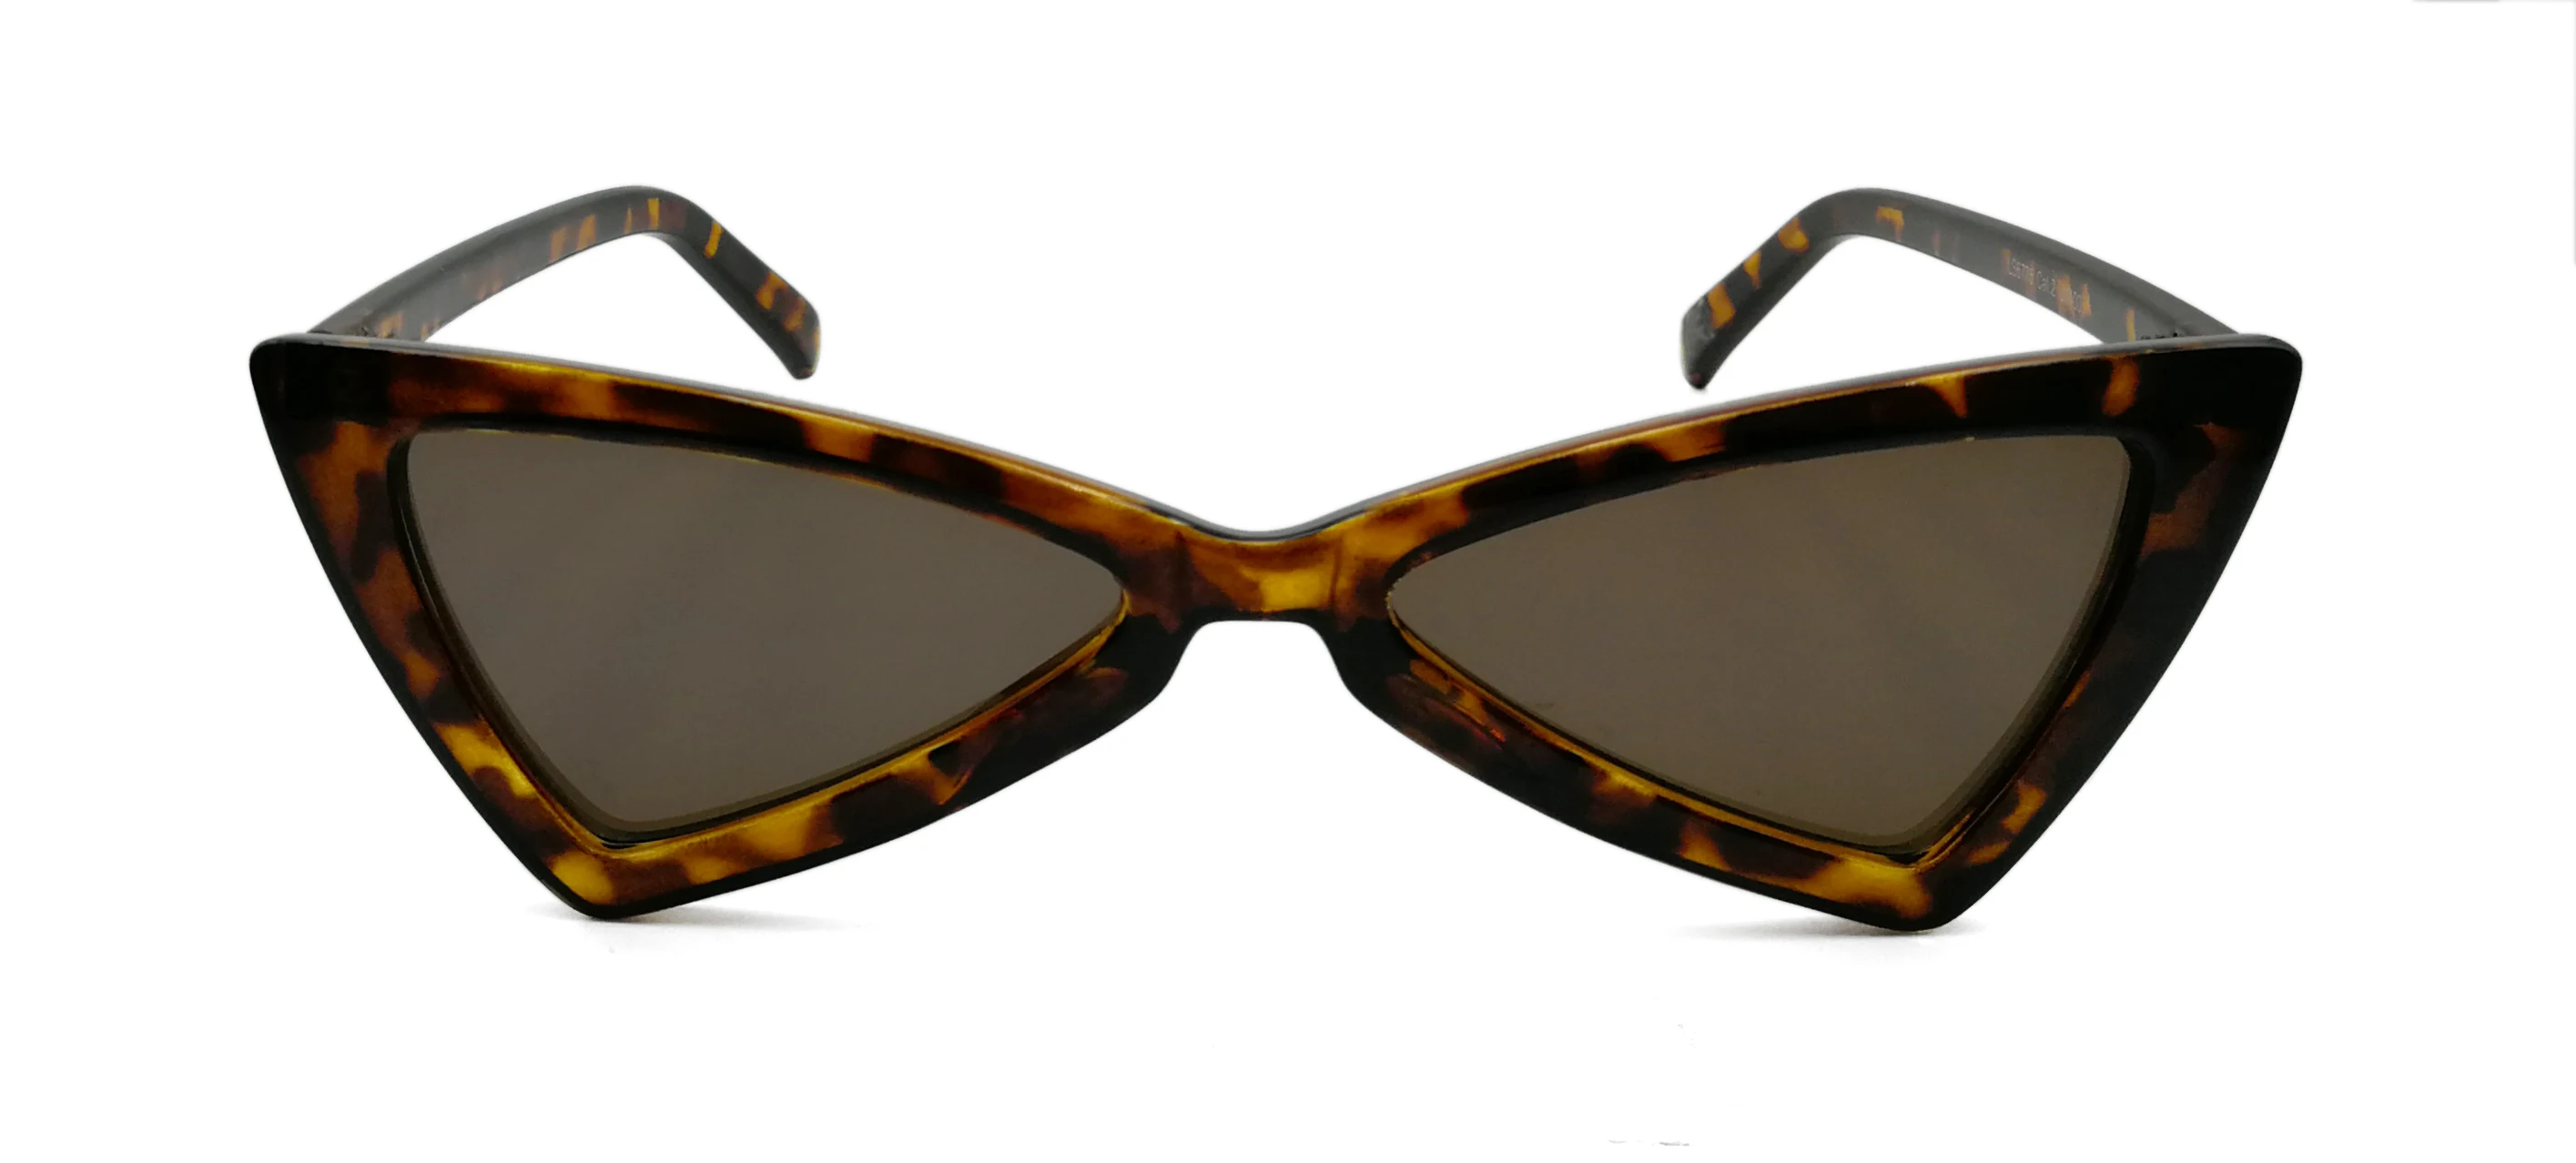 Eugenia beautiful design oversized cat eye sunglasses for Travel-11